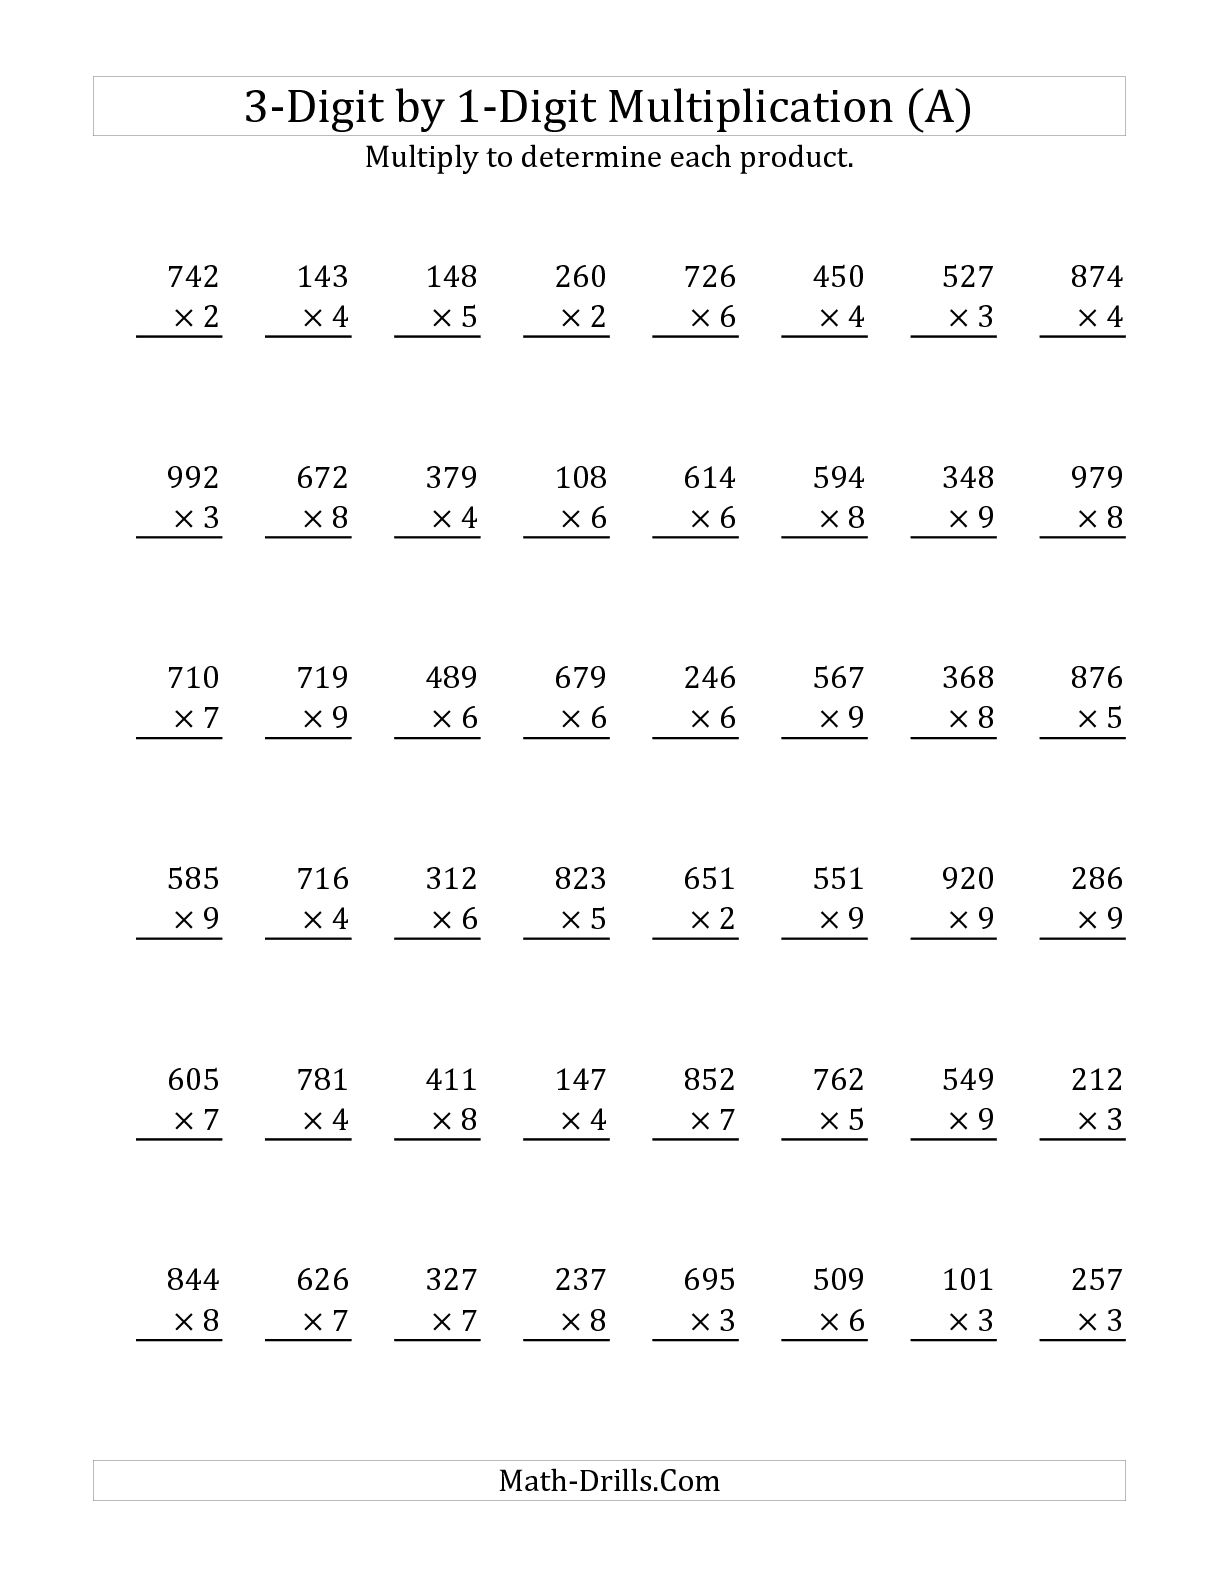 2-Digit by 1 Digit Multiplication Worksheets Image